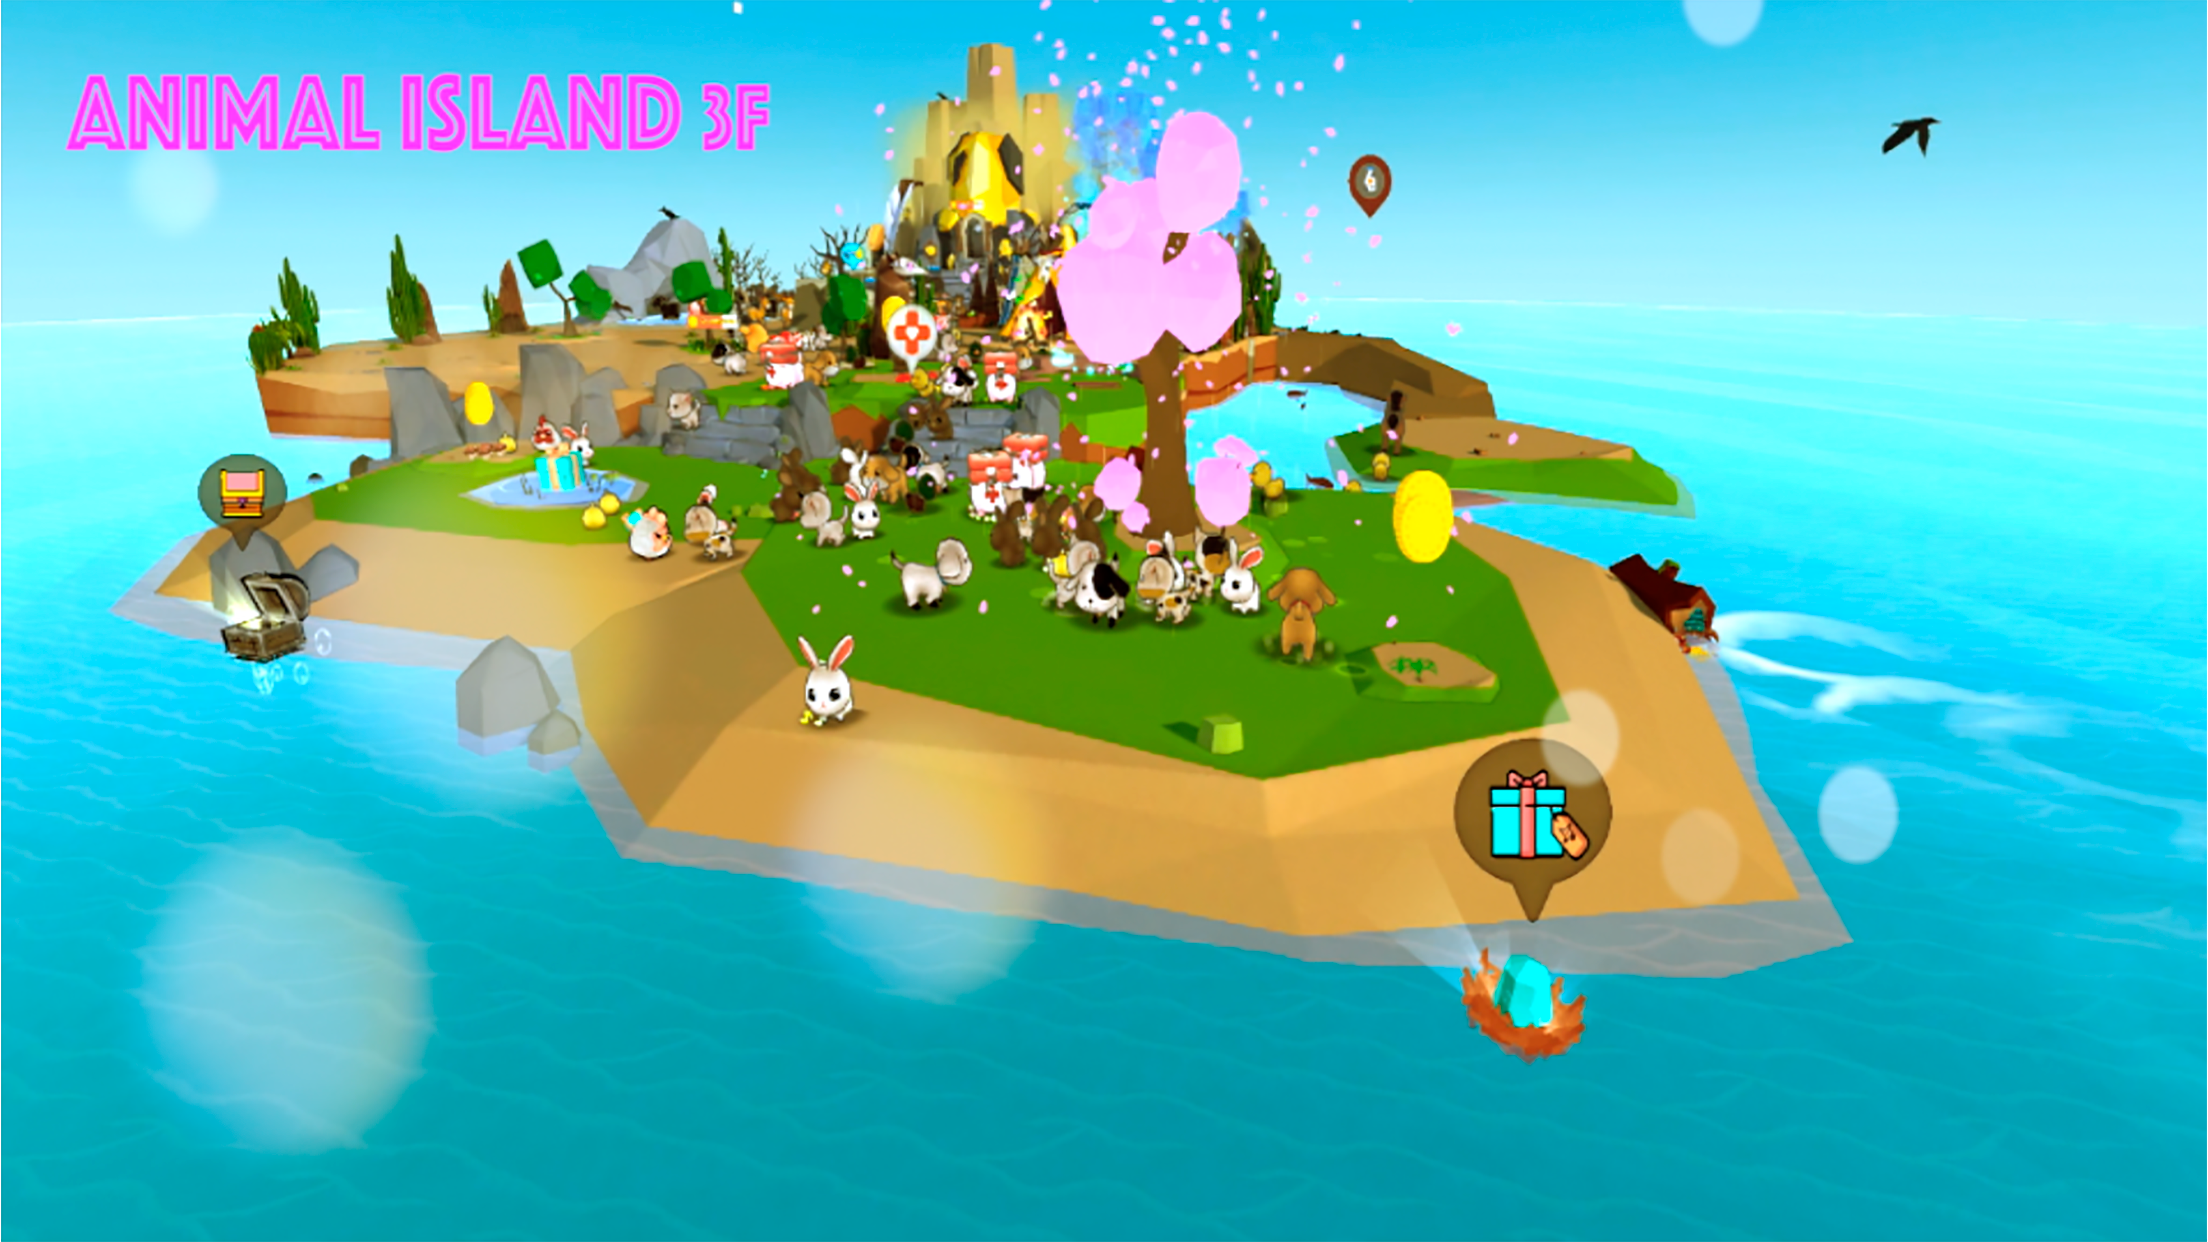 Screenshot 1 of Animal Island 3F ~ သူငယ်ချင်း၊ မိသားစု 43